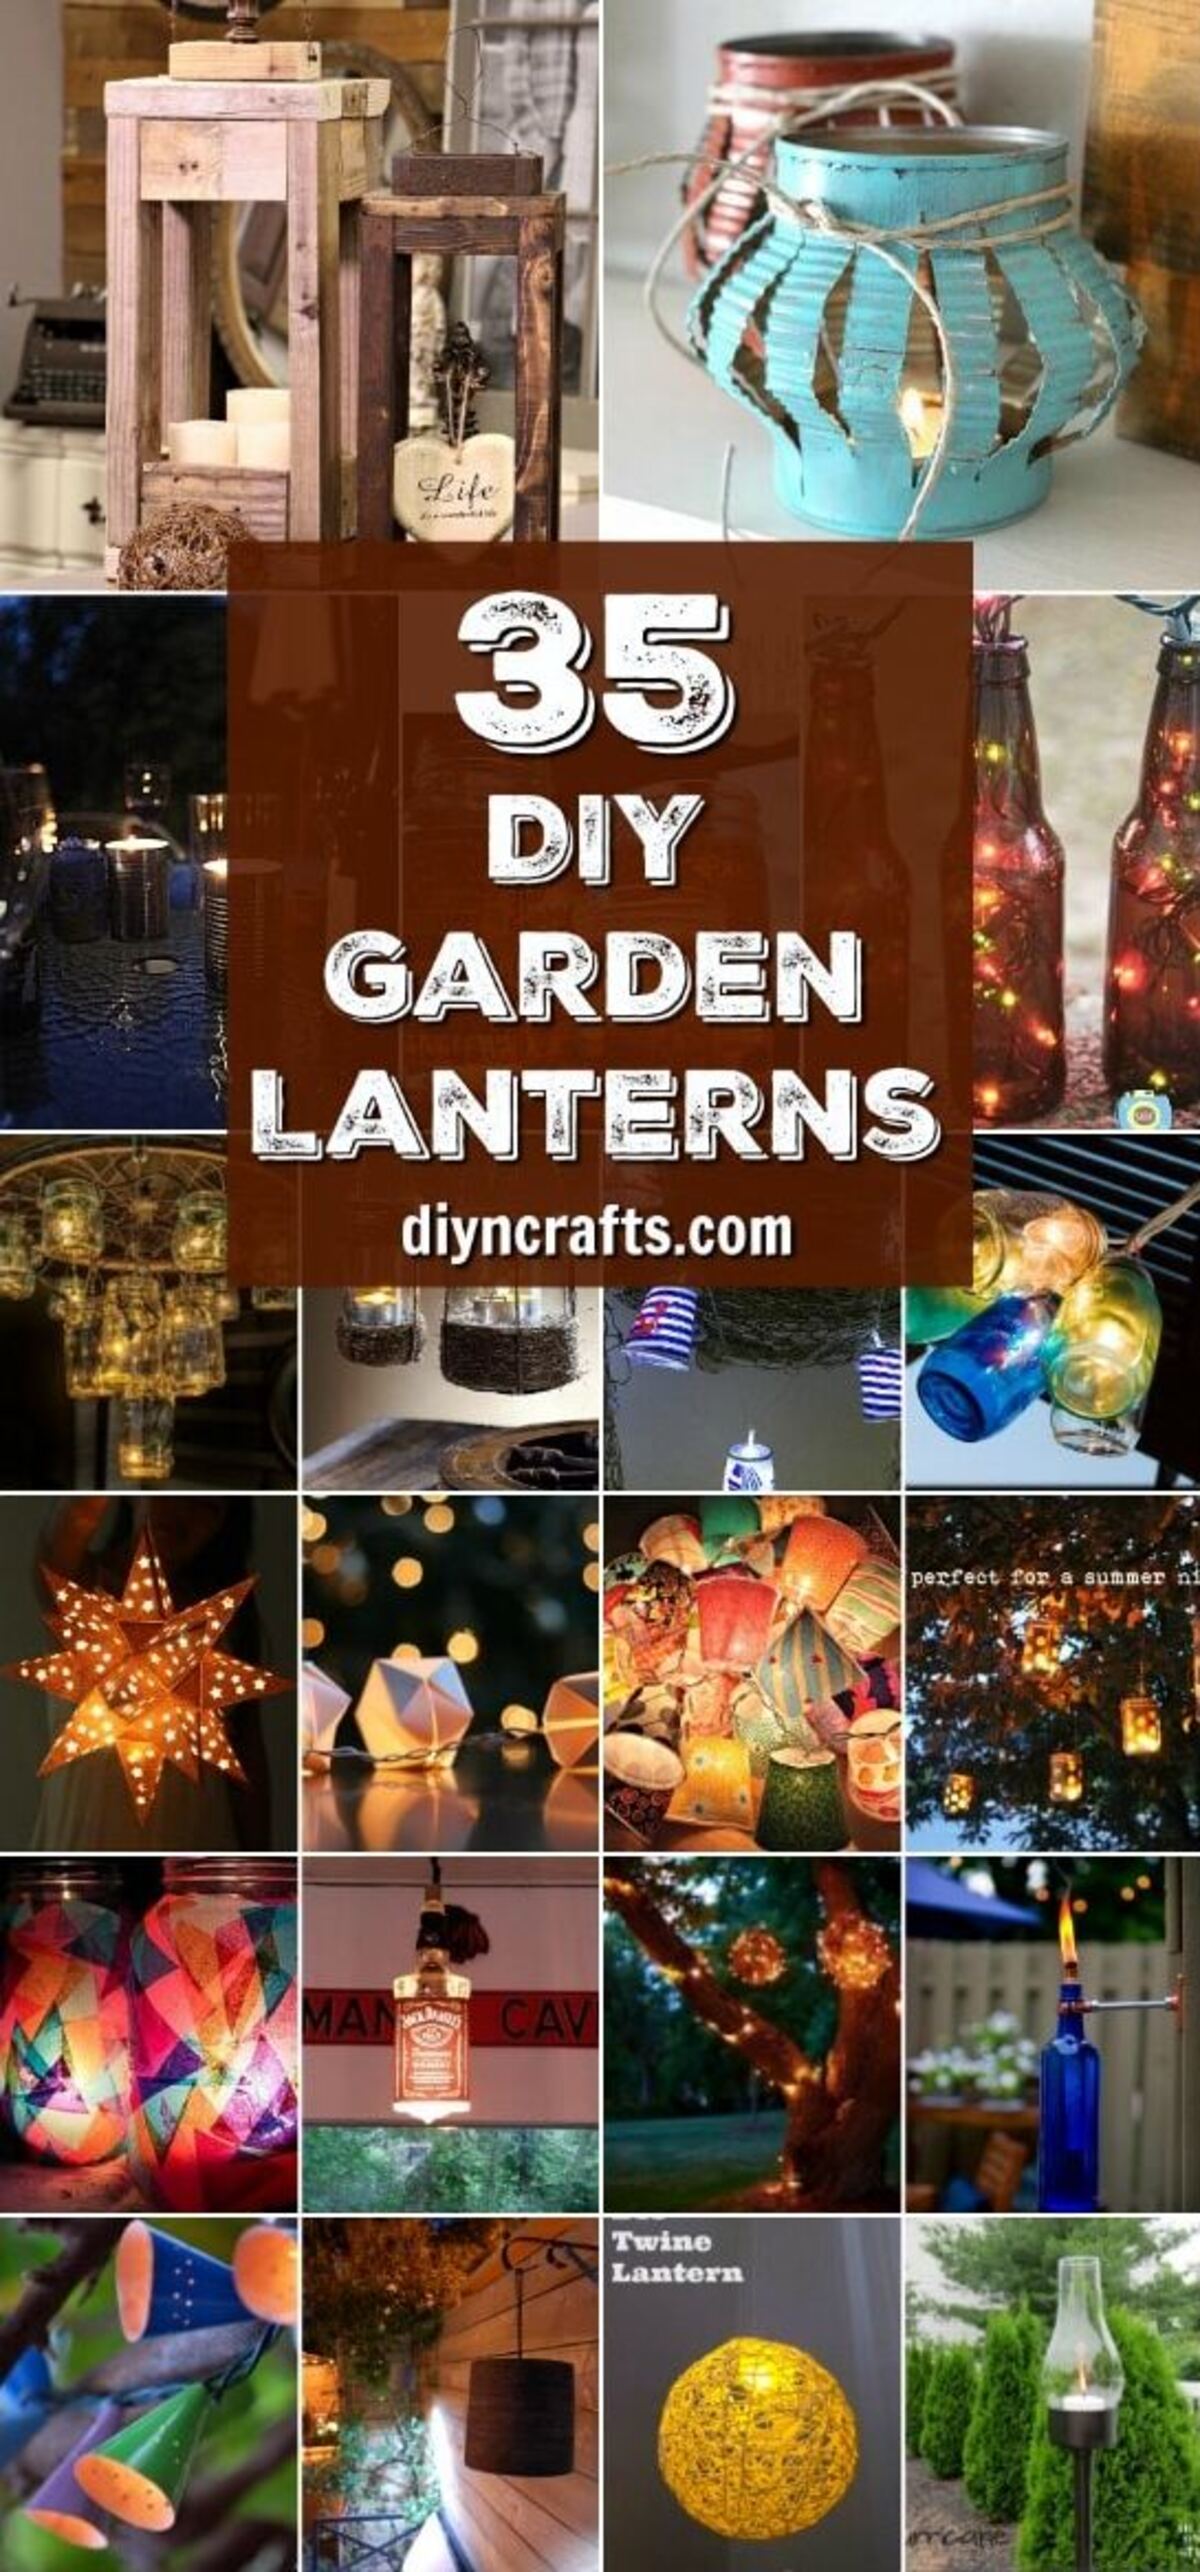 35 Luminous Garden Lantern Ideas To Brighten Up Your Outdoors pinterest image.